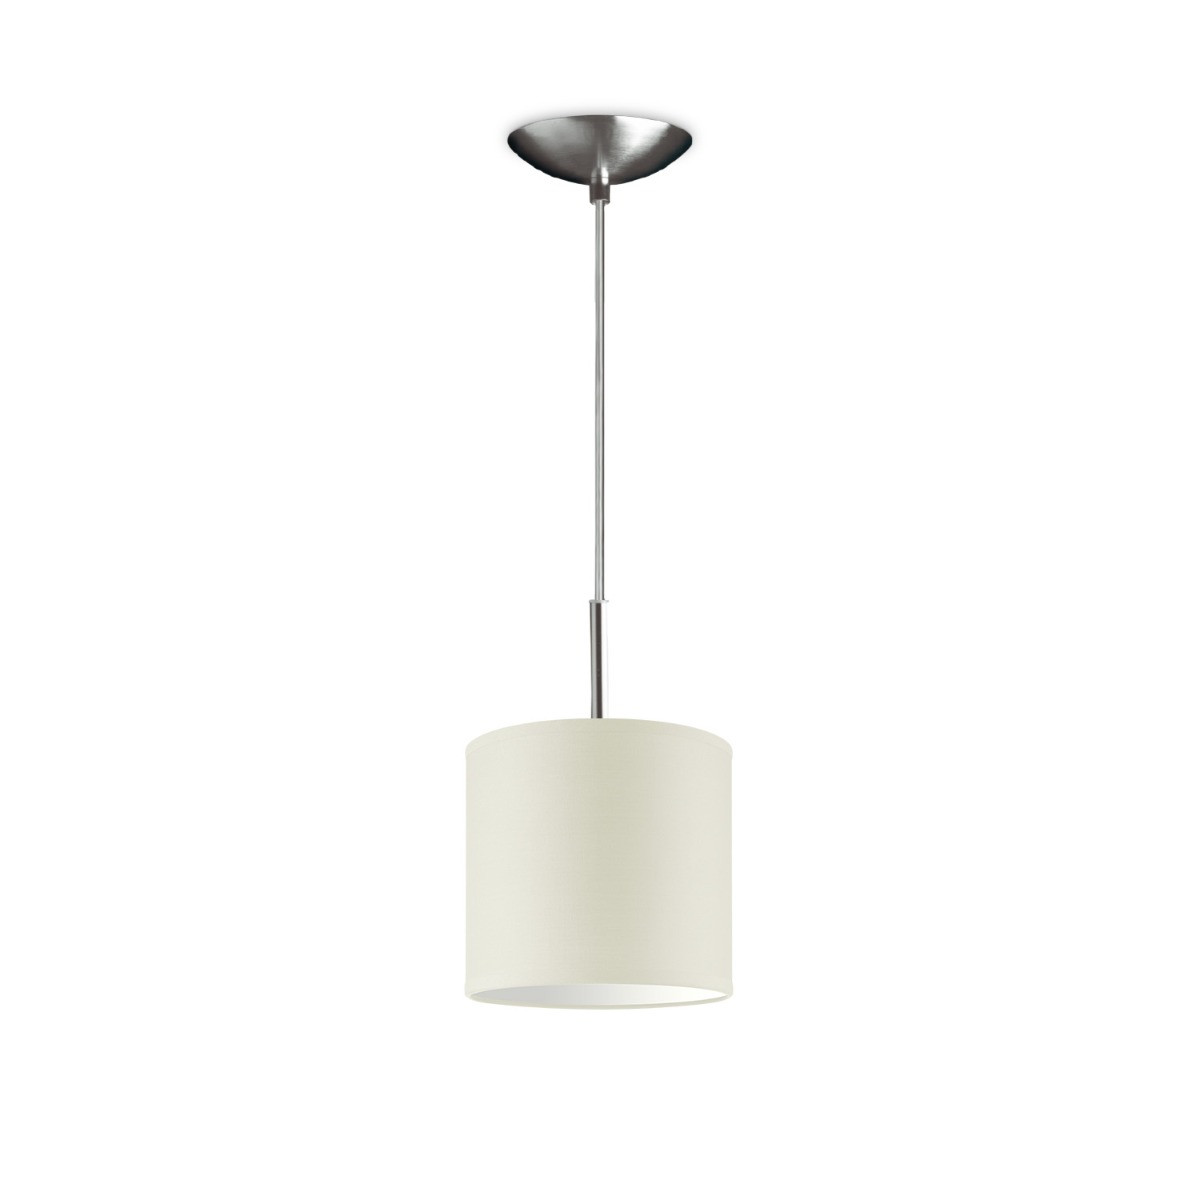 Light depot - hanglamp tube deluxe bling Ø 16 cm - warmwit - Outlet